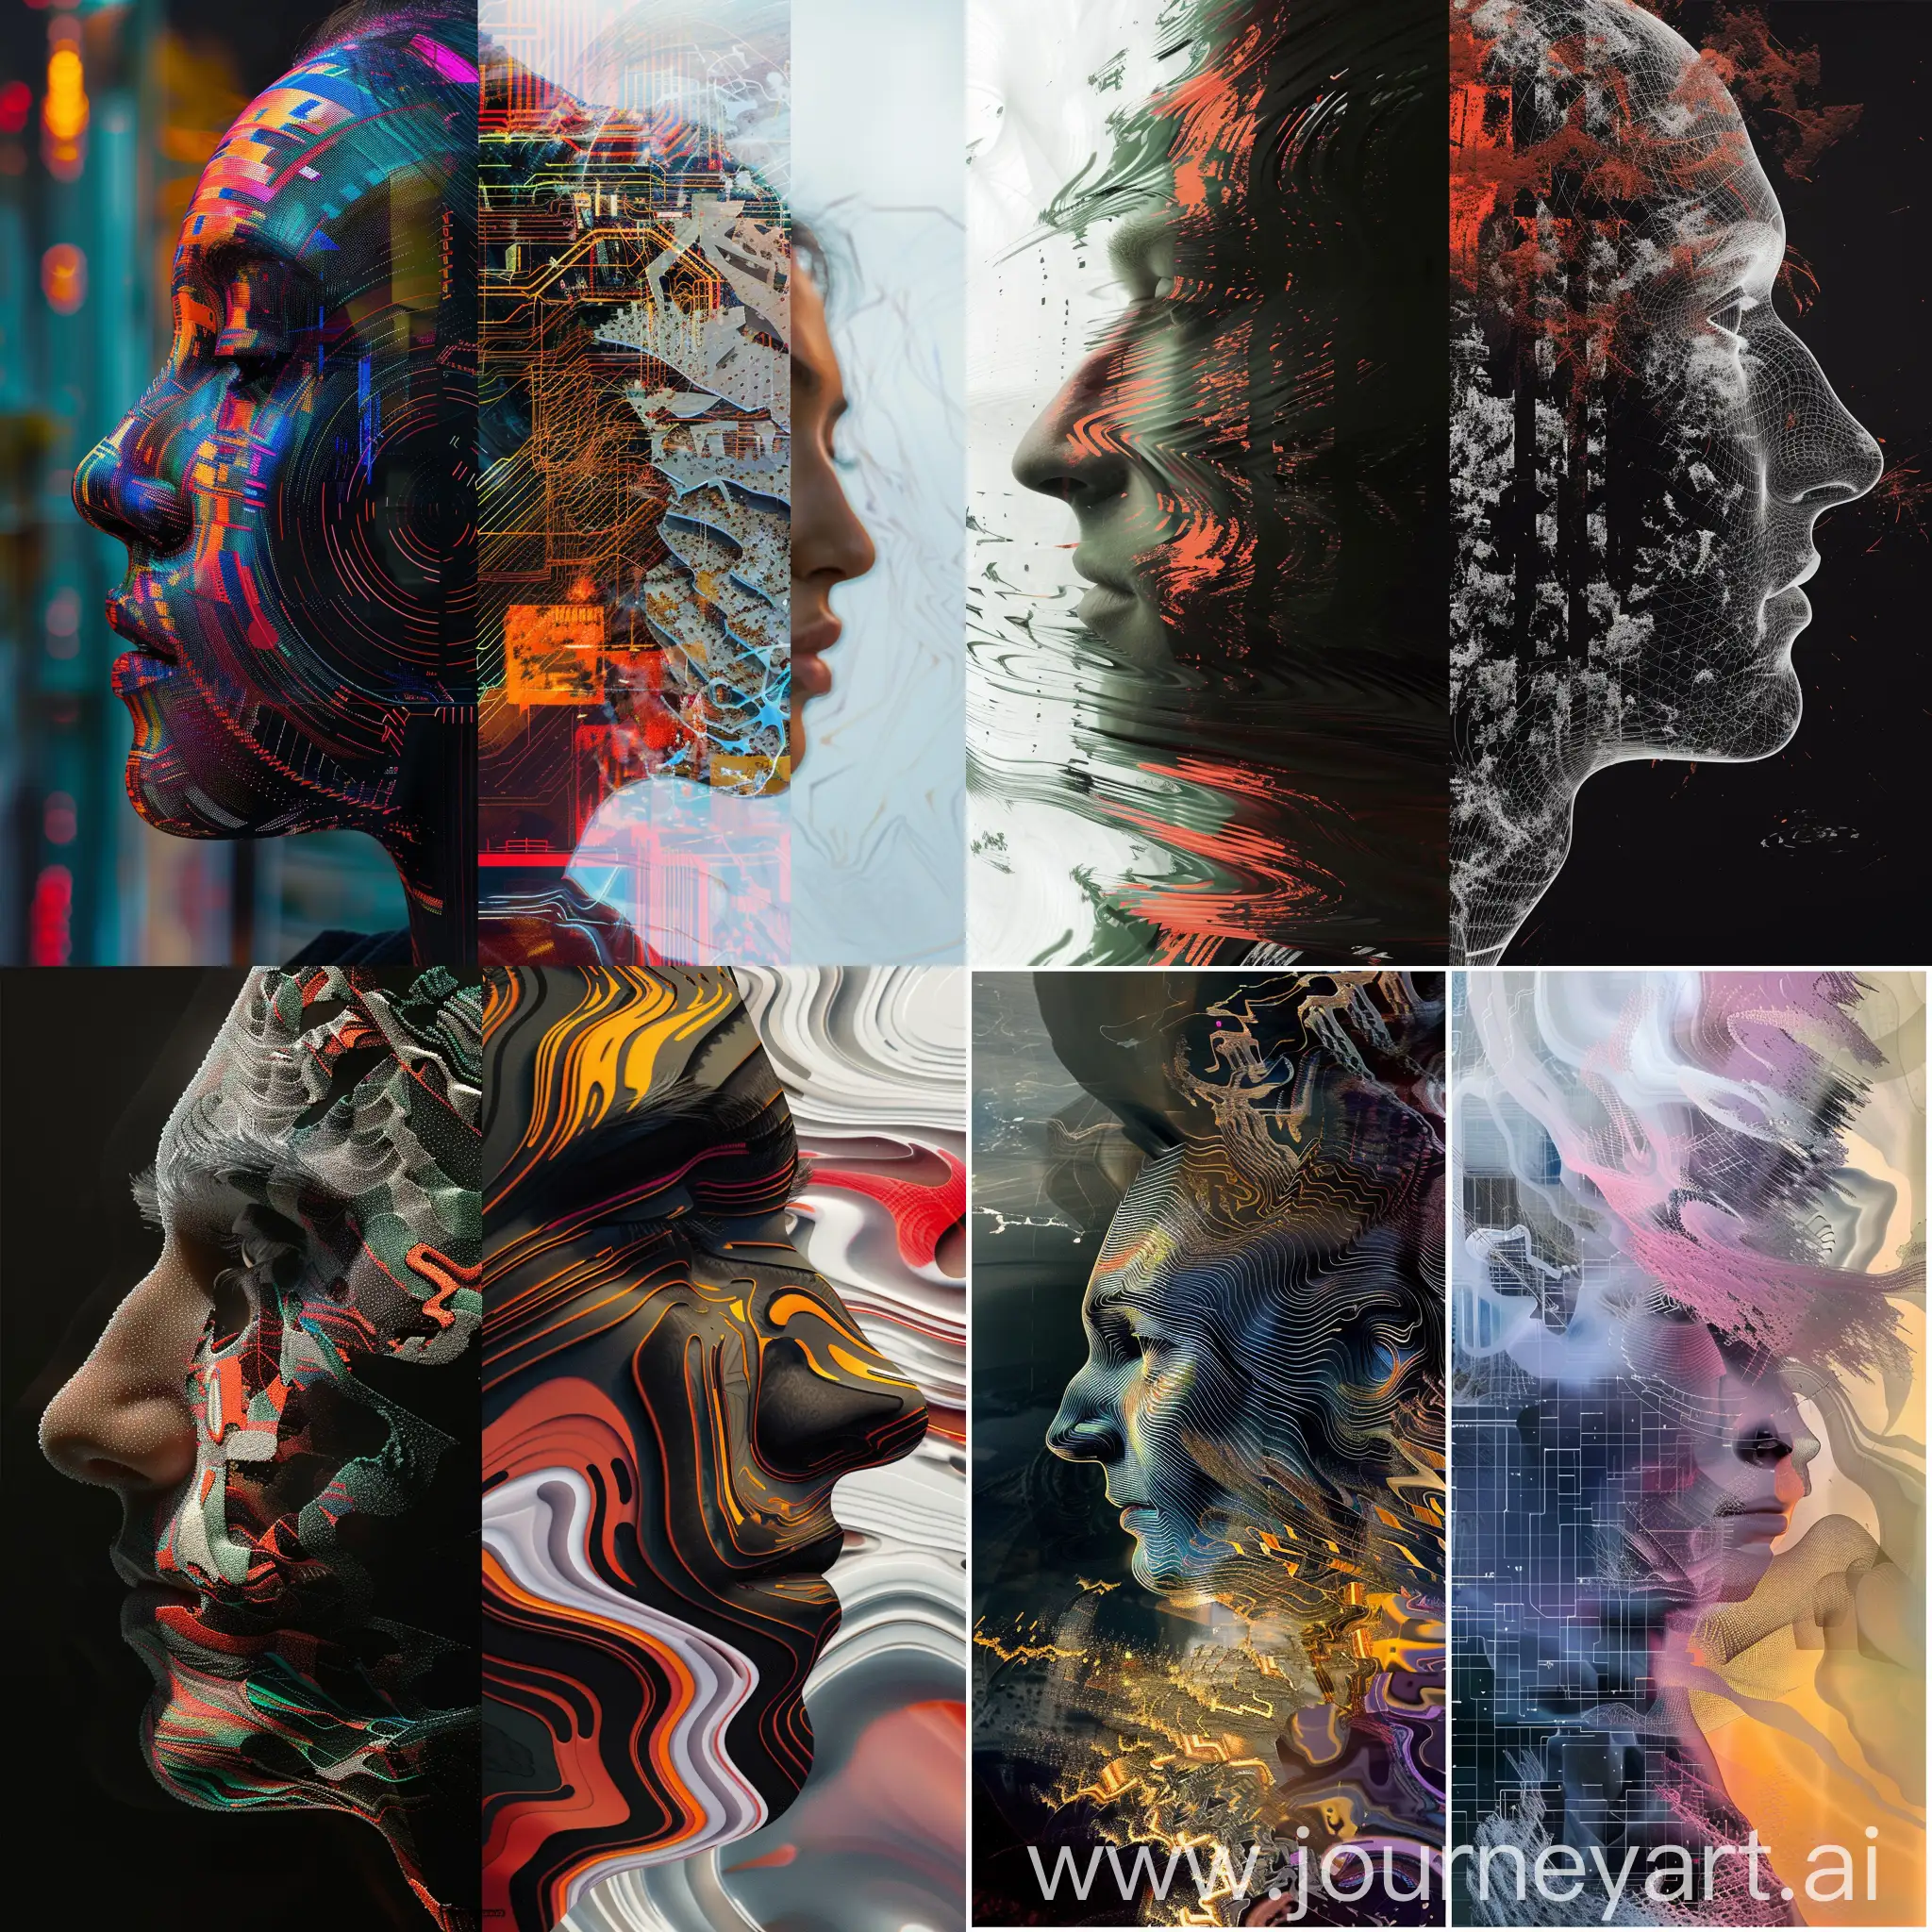 Algorithmic-Art-vs-HumanCreated-Art-A-SidebySide-Comparison